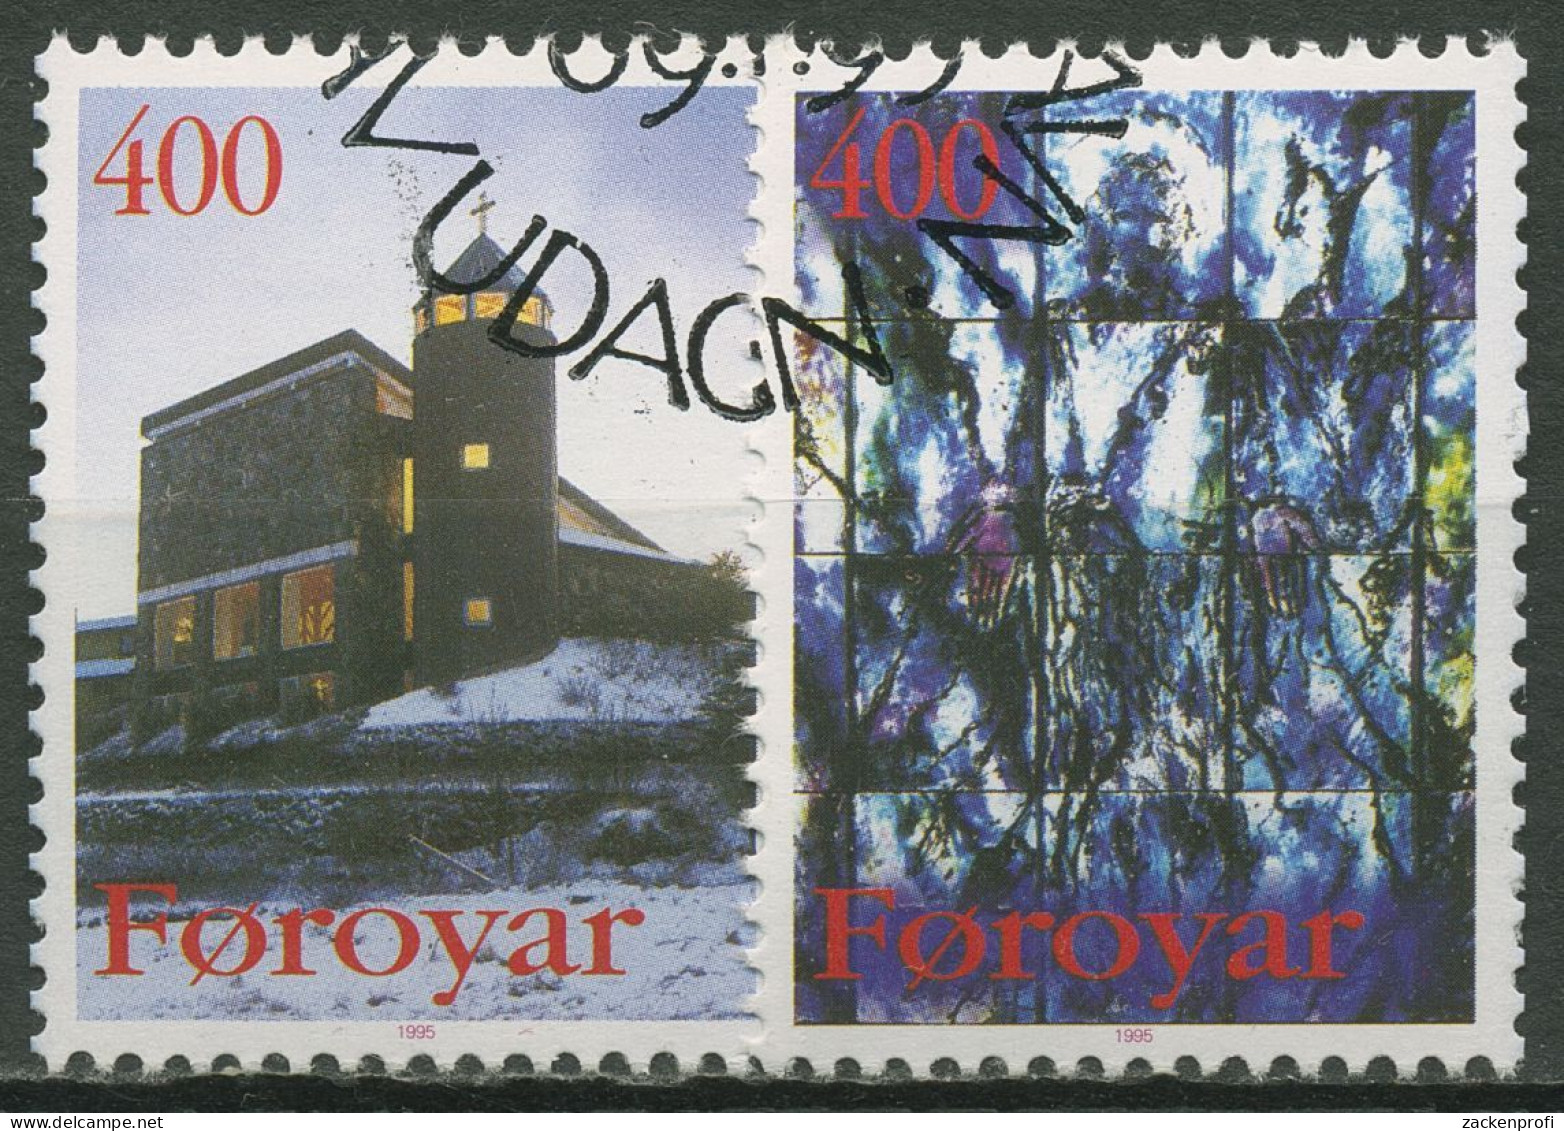 Färöer 1995 Katholische Kirche 289/90 Gestempelt - Faroe Islands